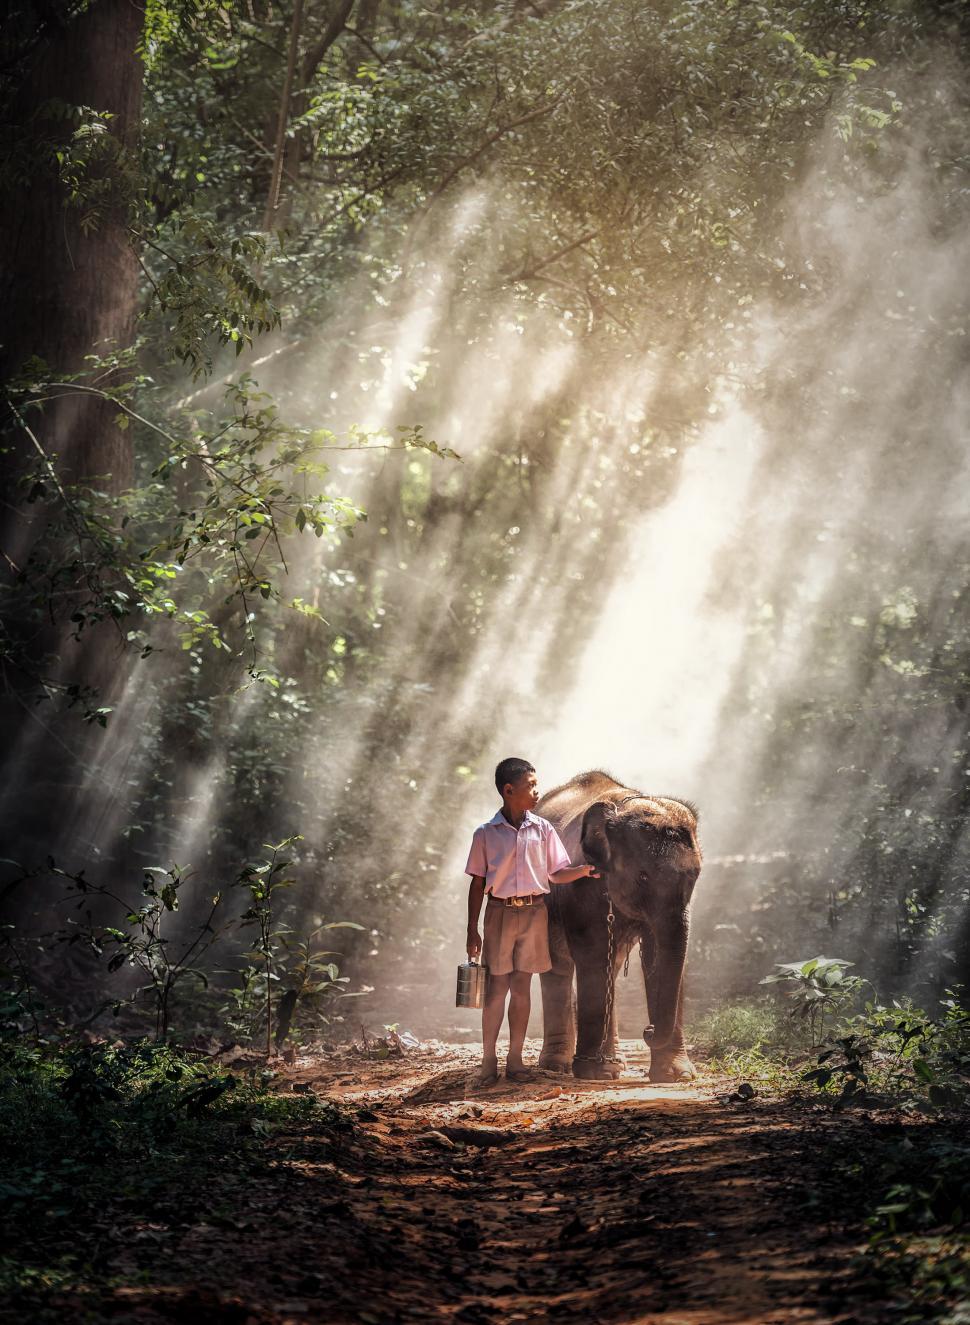 Free Image of Kid with Elephant 